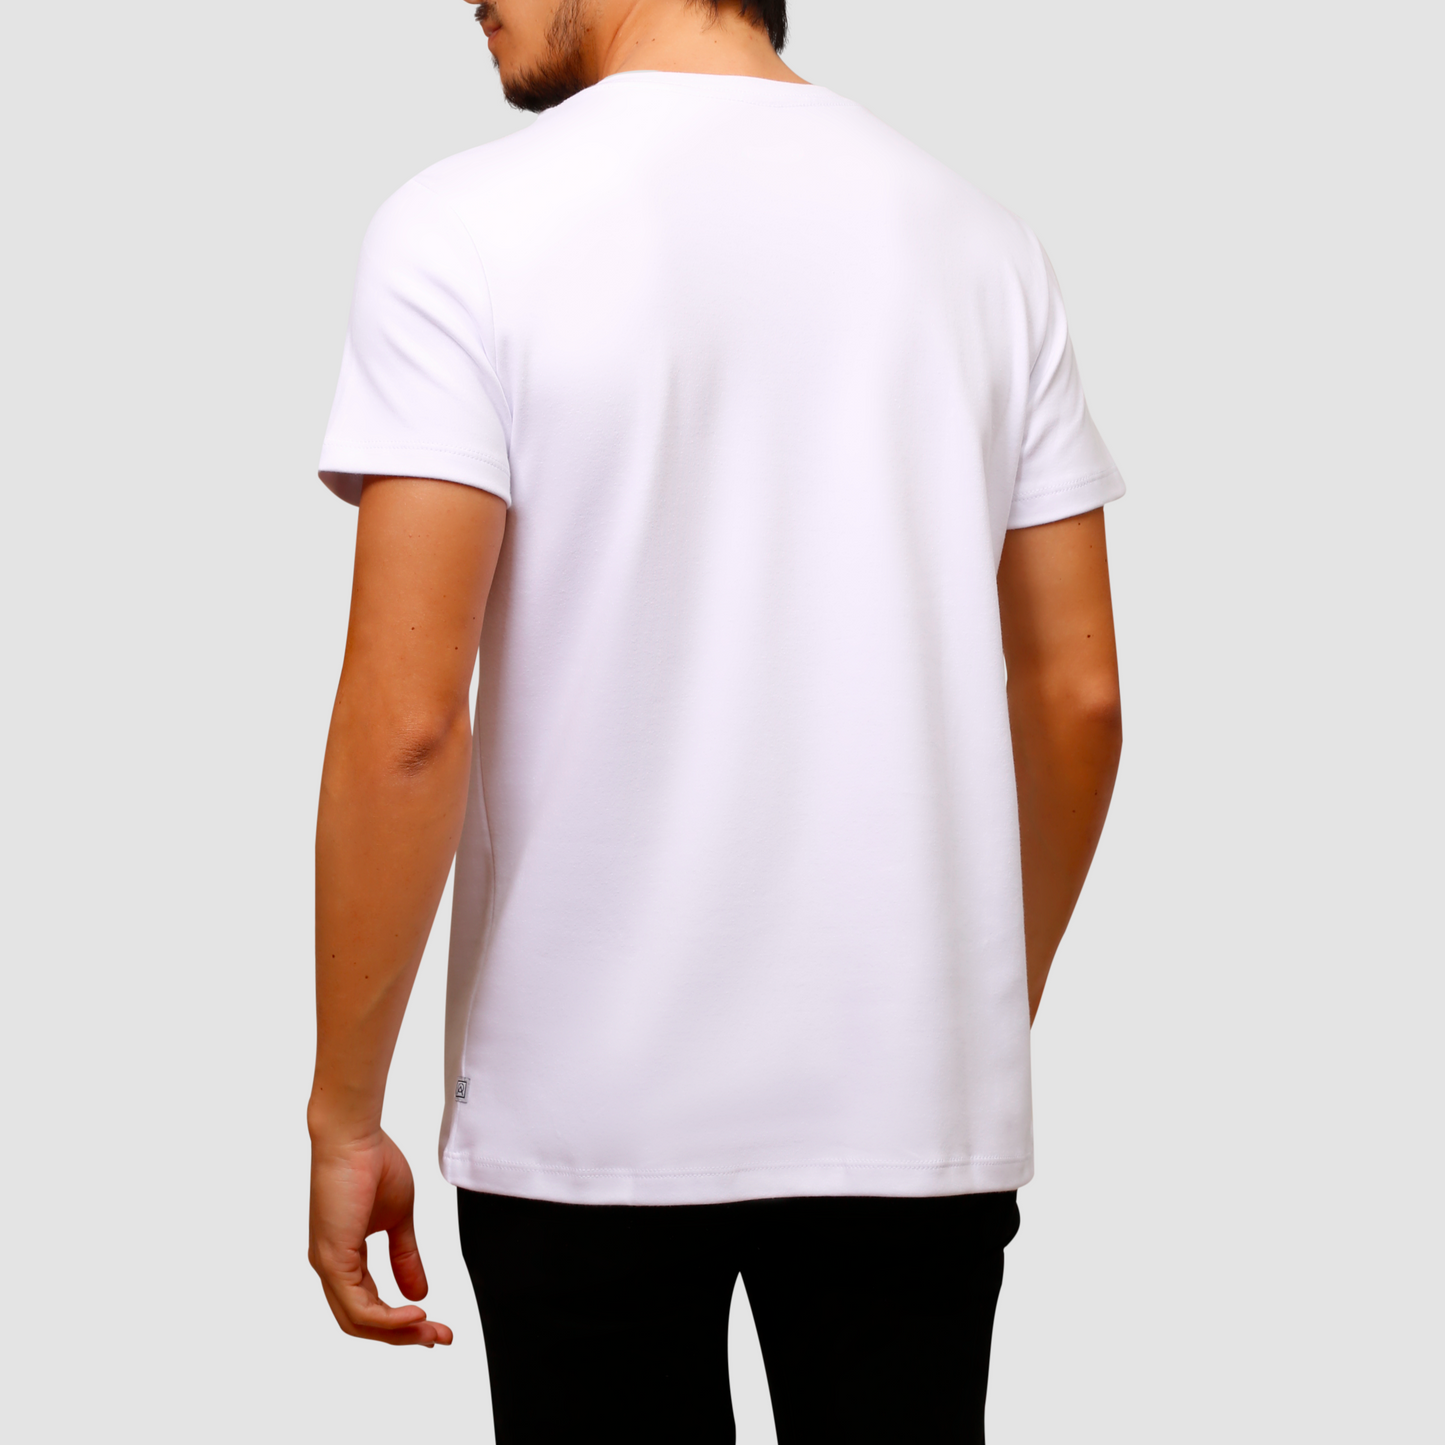 ORIBA | Camiseta Malha Dupla Gola C Branca Costas